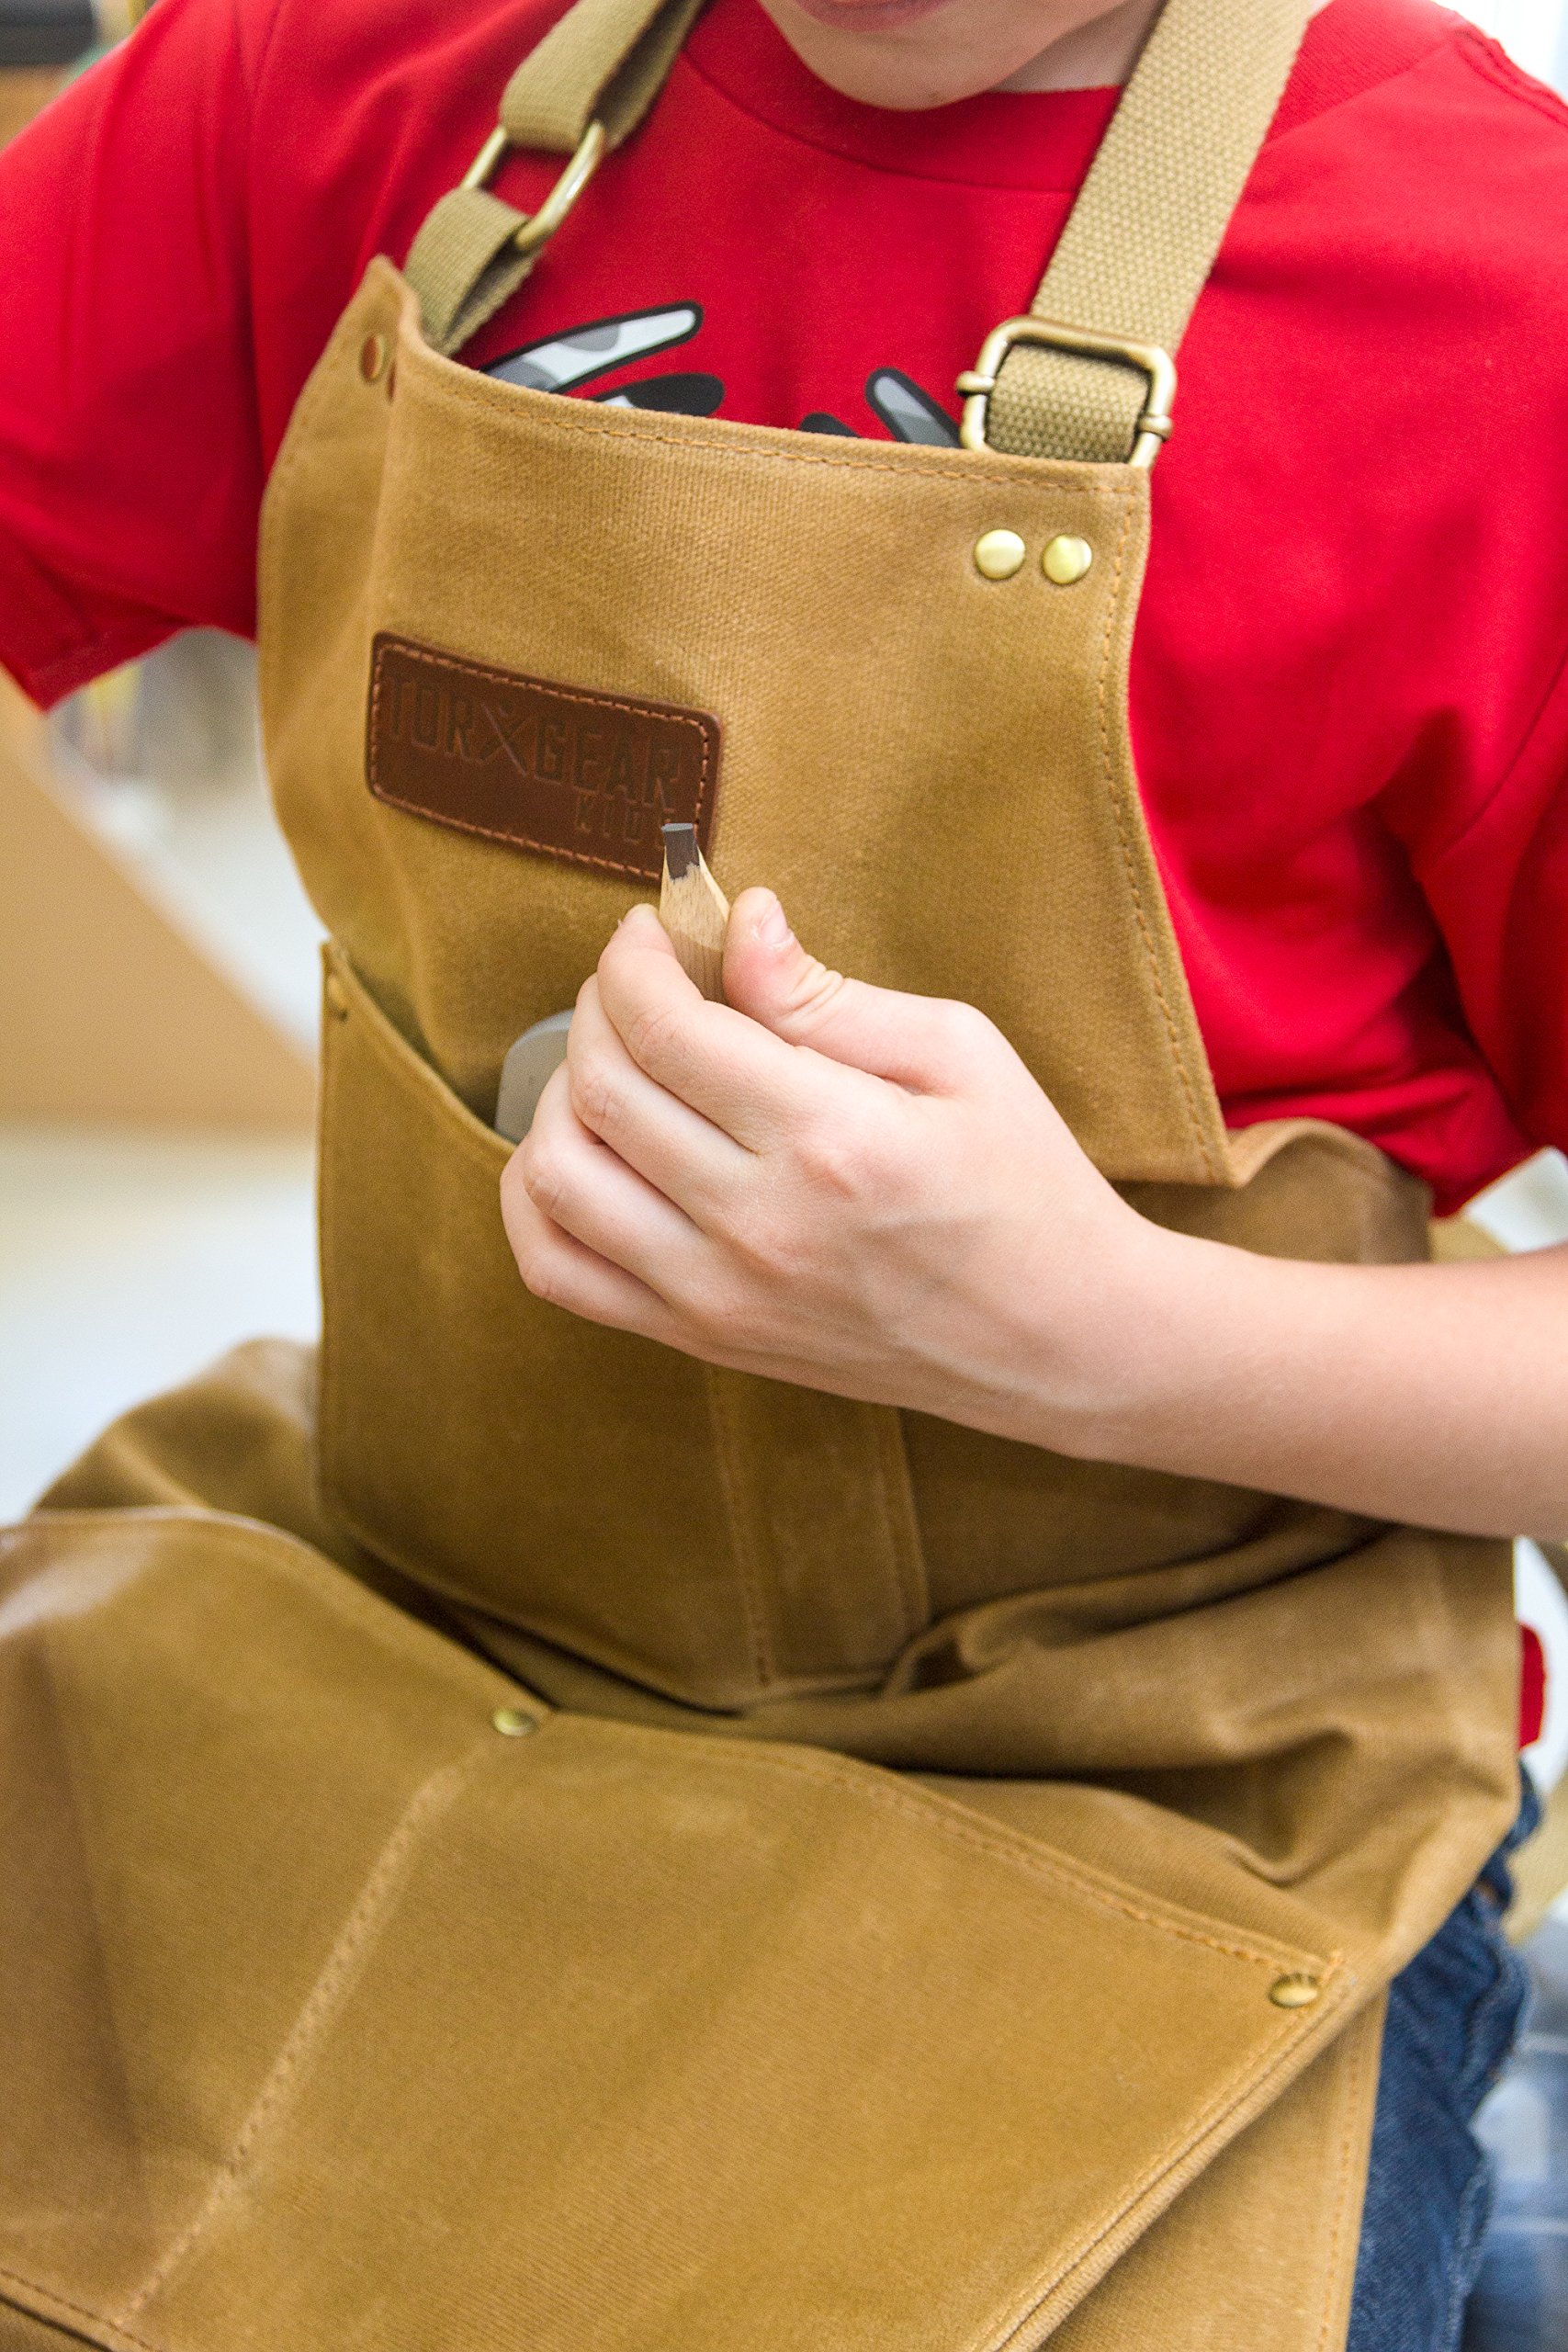 TorxGear Kids Child's Work Apron - Waxed Canvas Tool Apron - Craftsmen Quality Heavy Duty Safety Smock